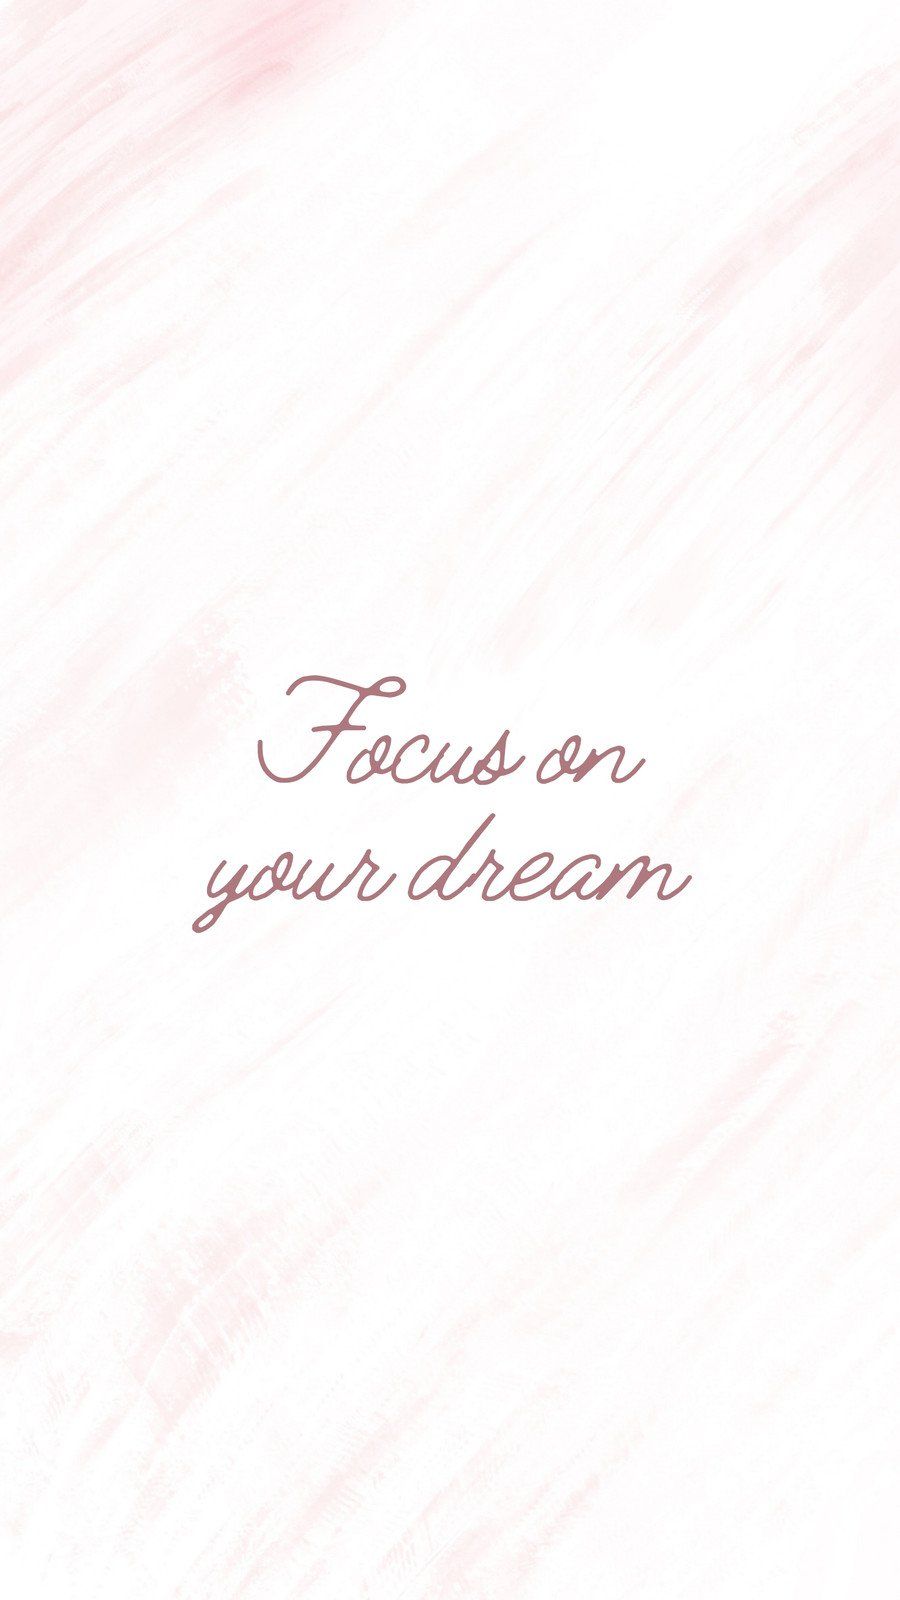 Focus on your dream. - Study